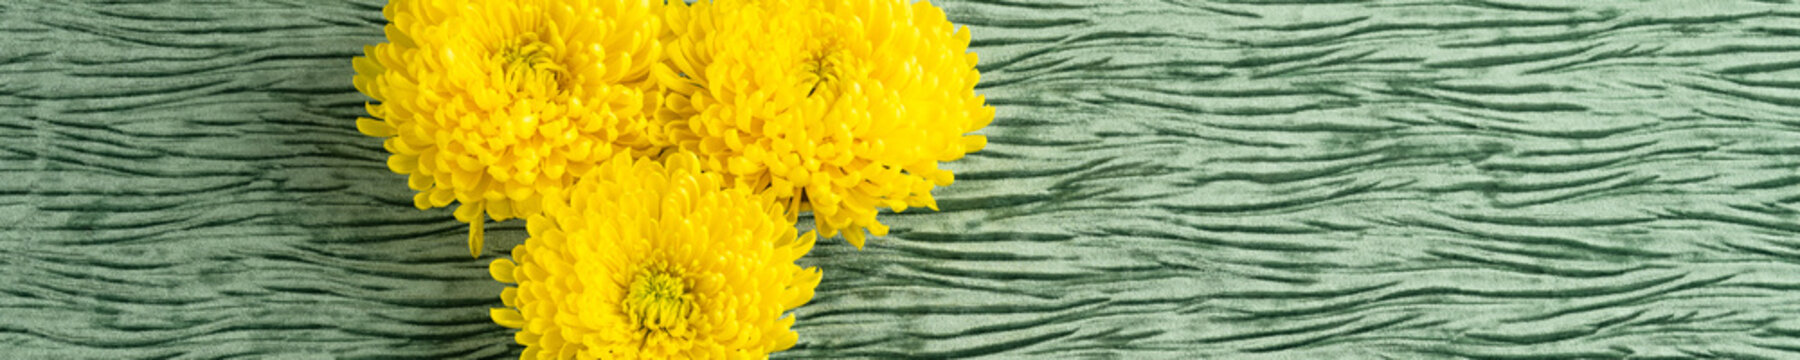 Three large yellow chrysanthemum flowers on a textured green velvet background, Happy Spring
